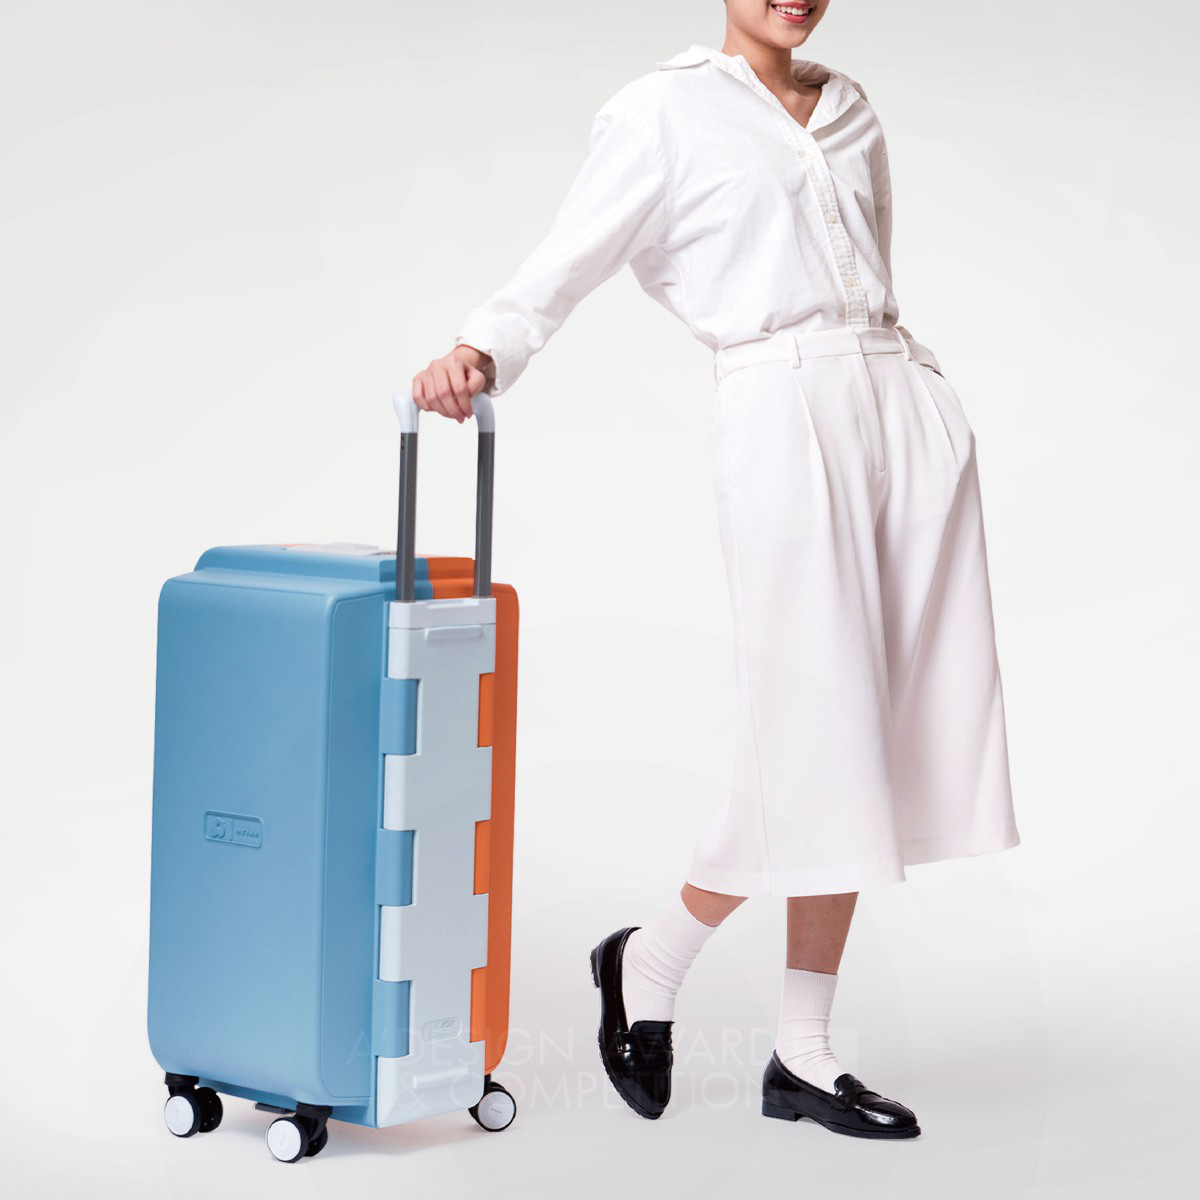 Rhita: The Sustainable Suitcase